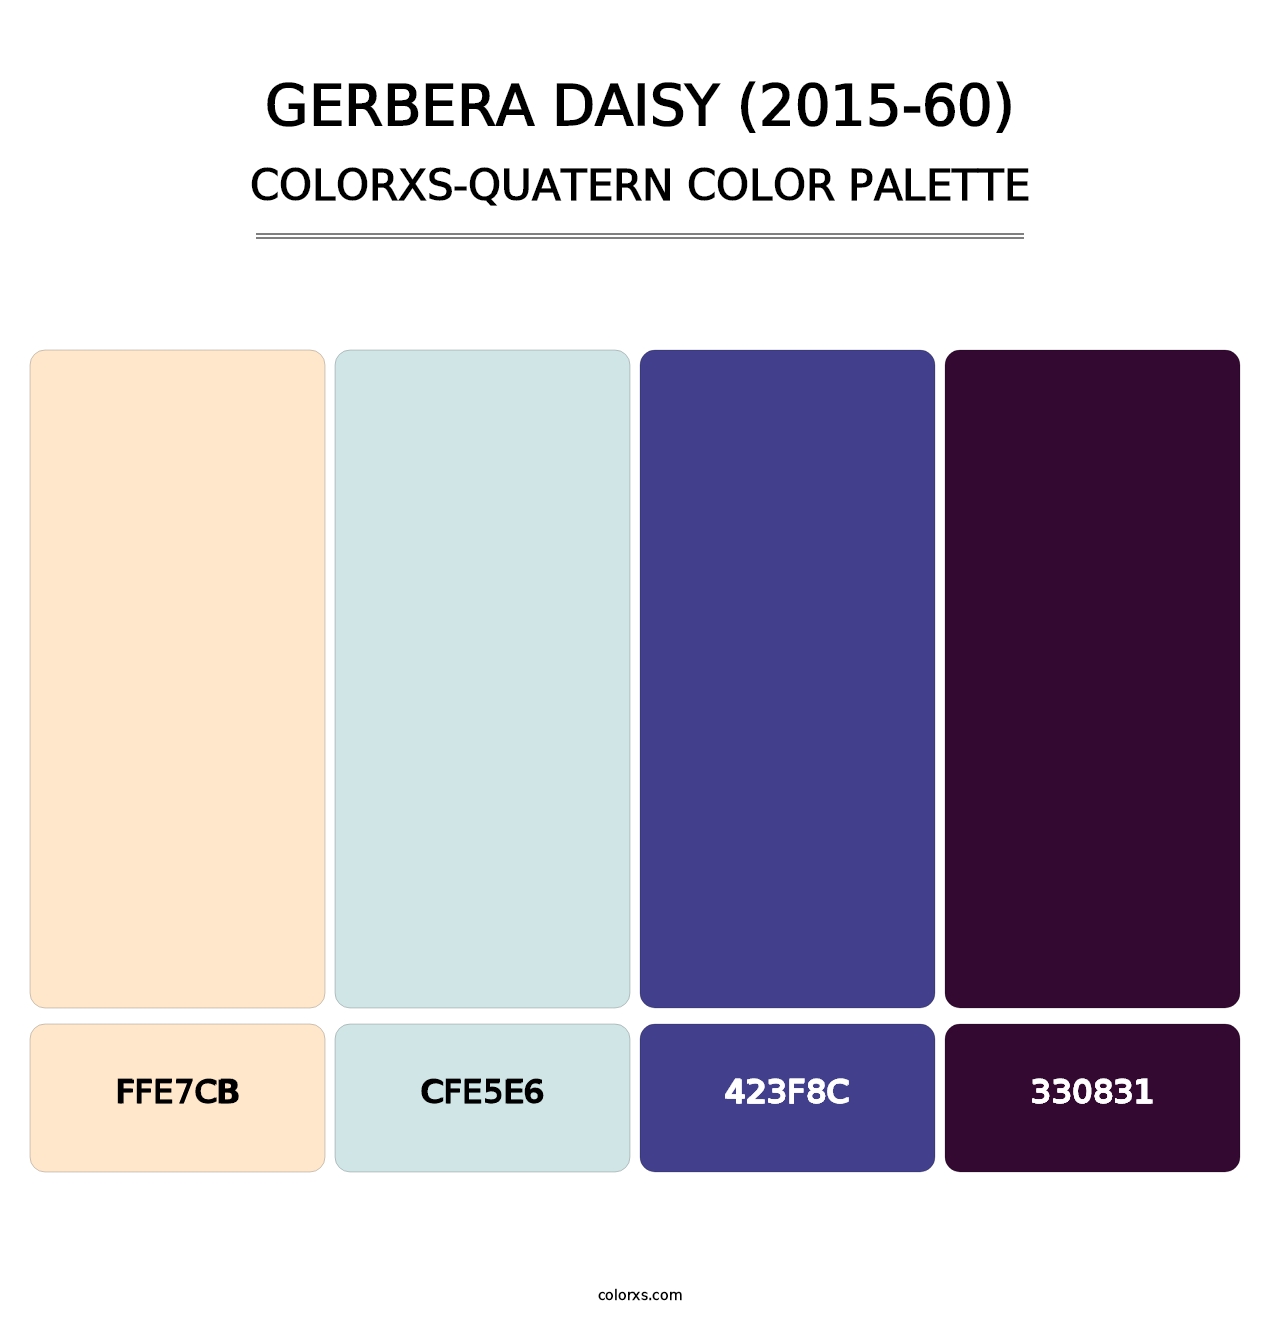 Gerbera Daisy (2015-60) - Colorxs Quatern Palette